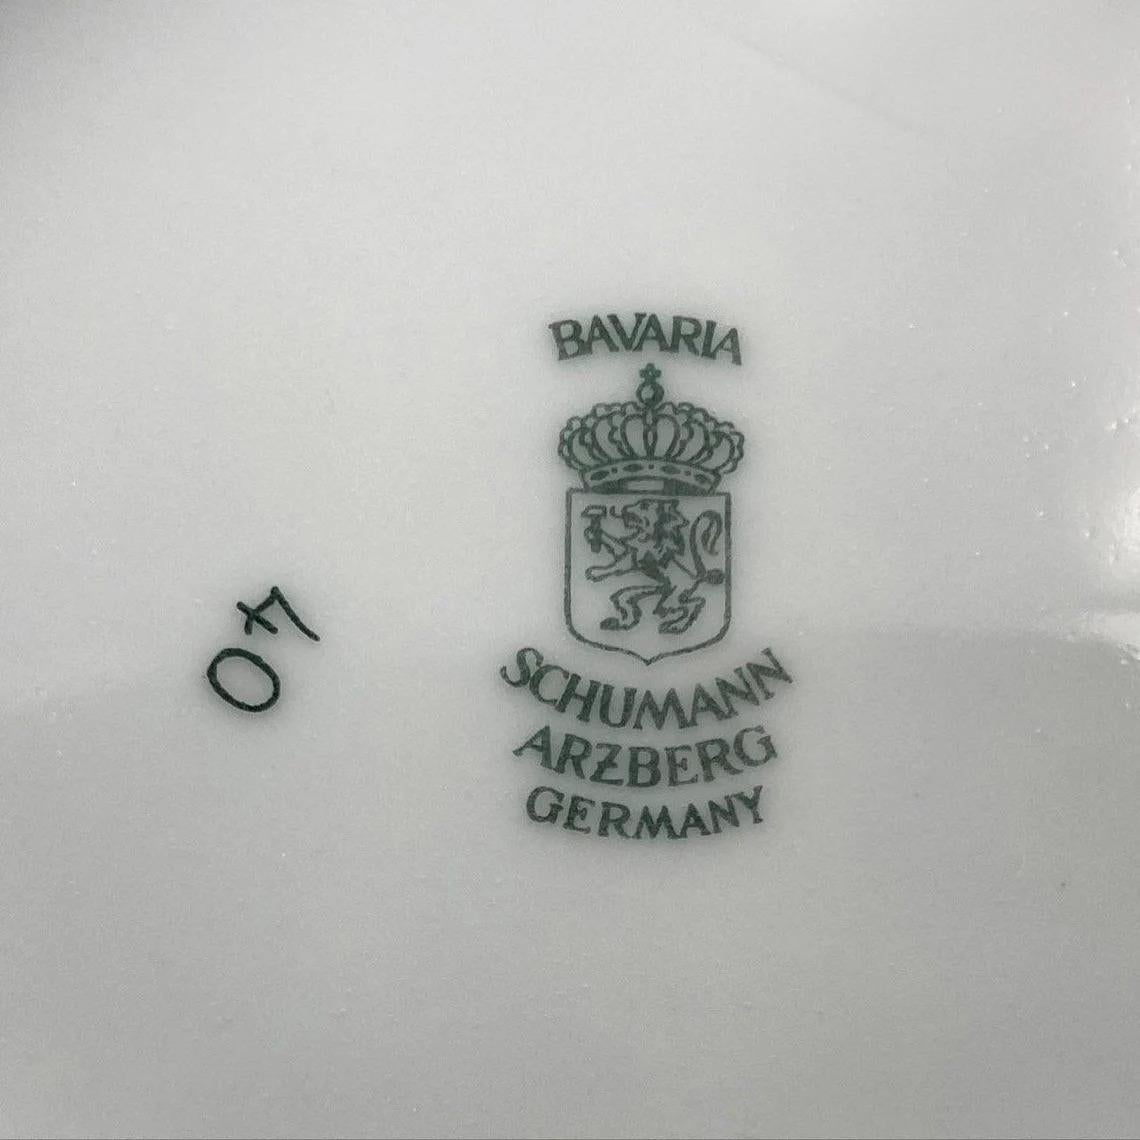 arzberg bavaria porcelain marks